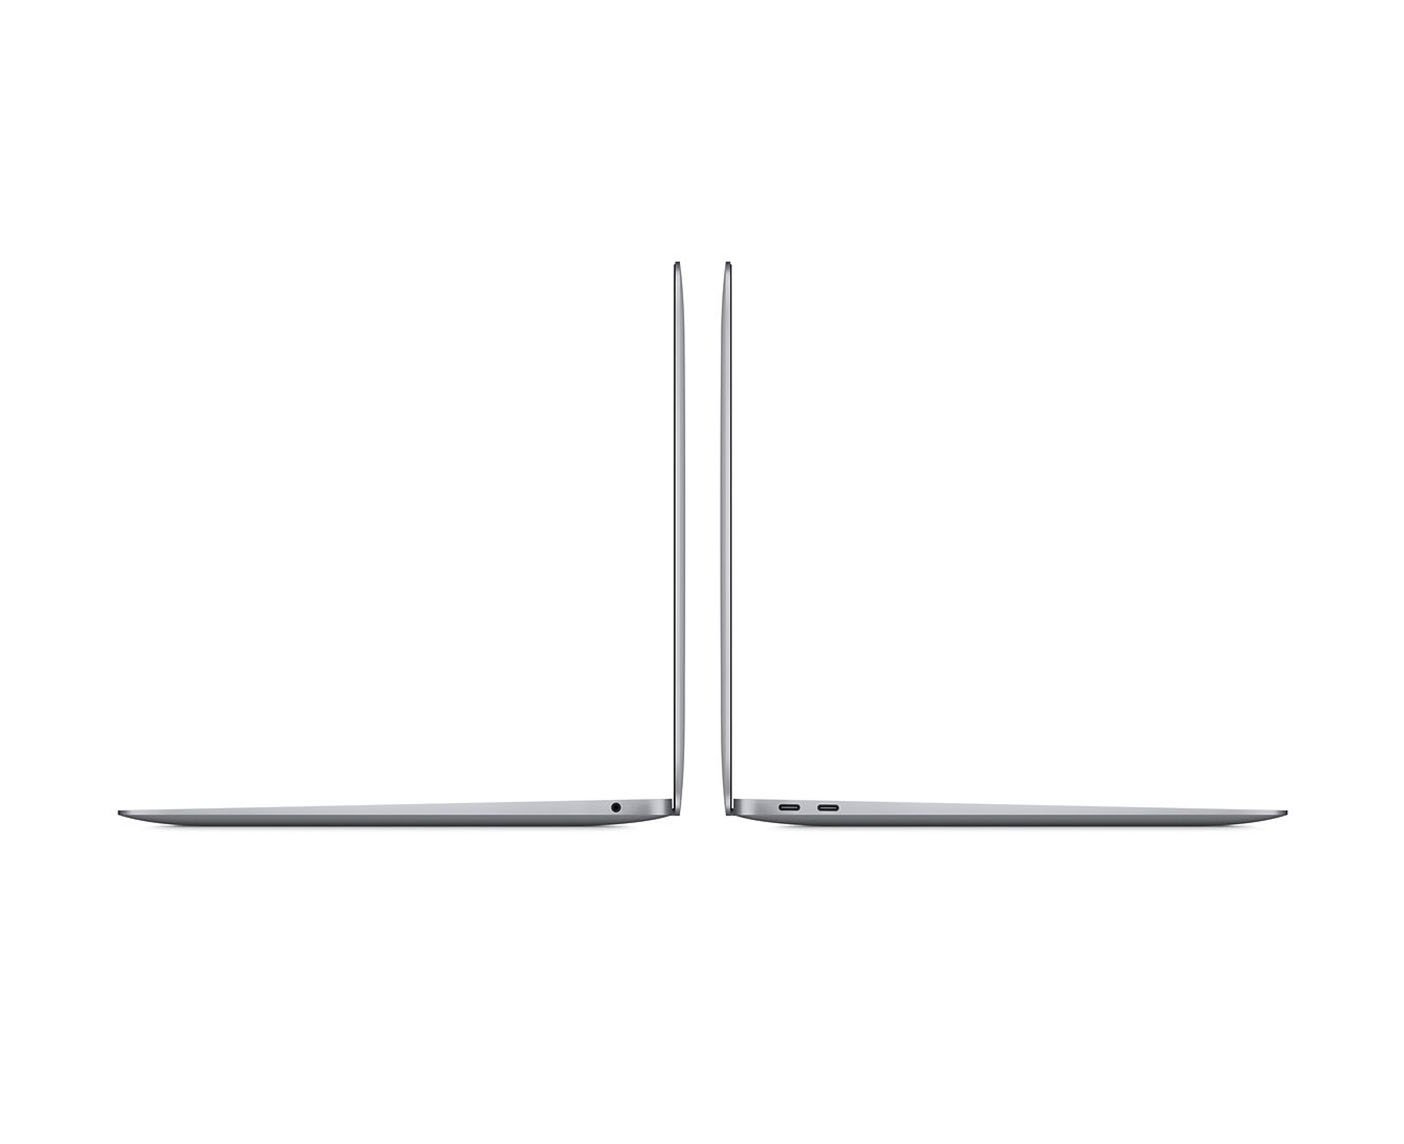 Macbook Air Retina - 2020 - i7 - 16GB - Space Grey